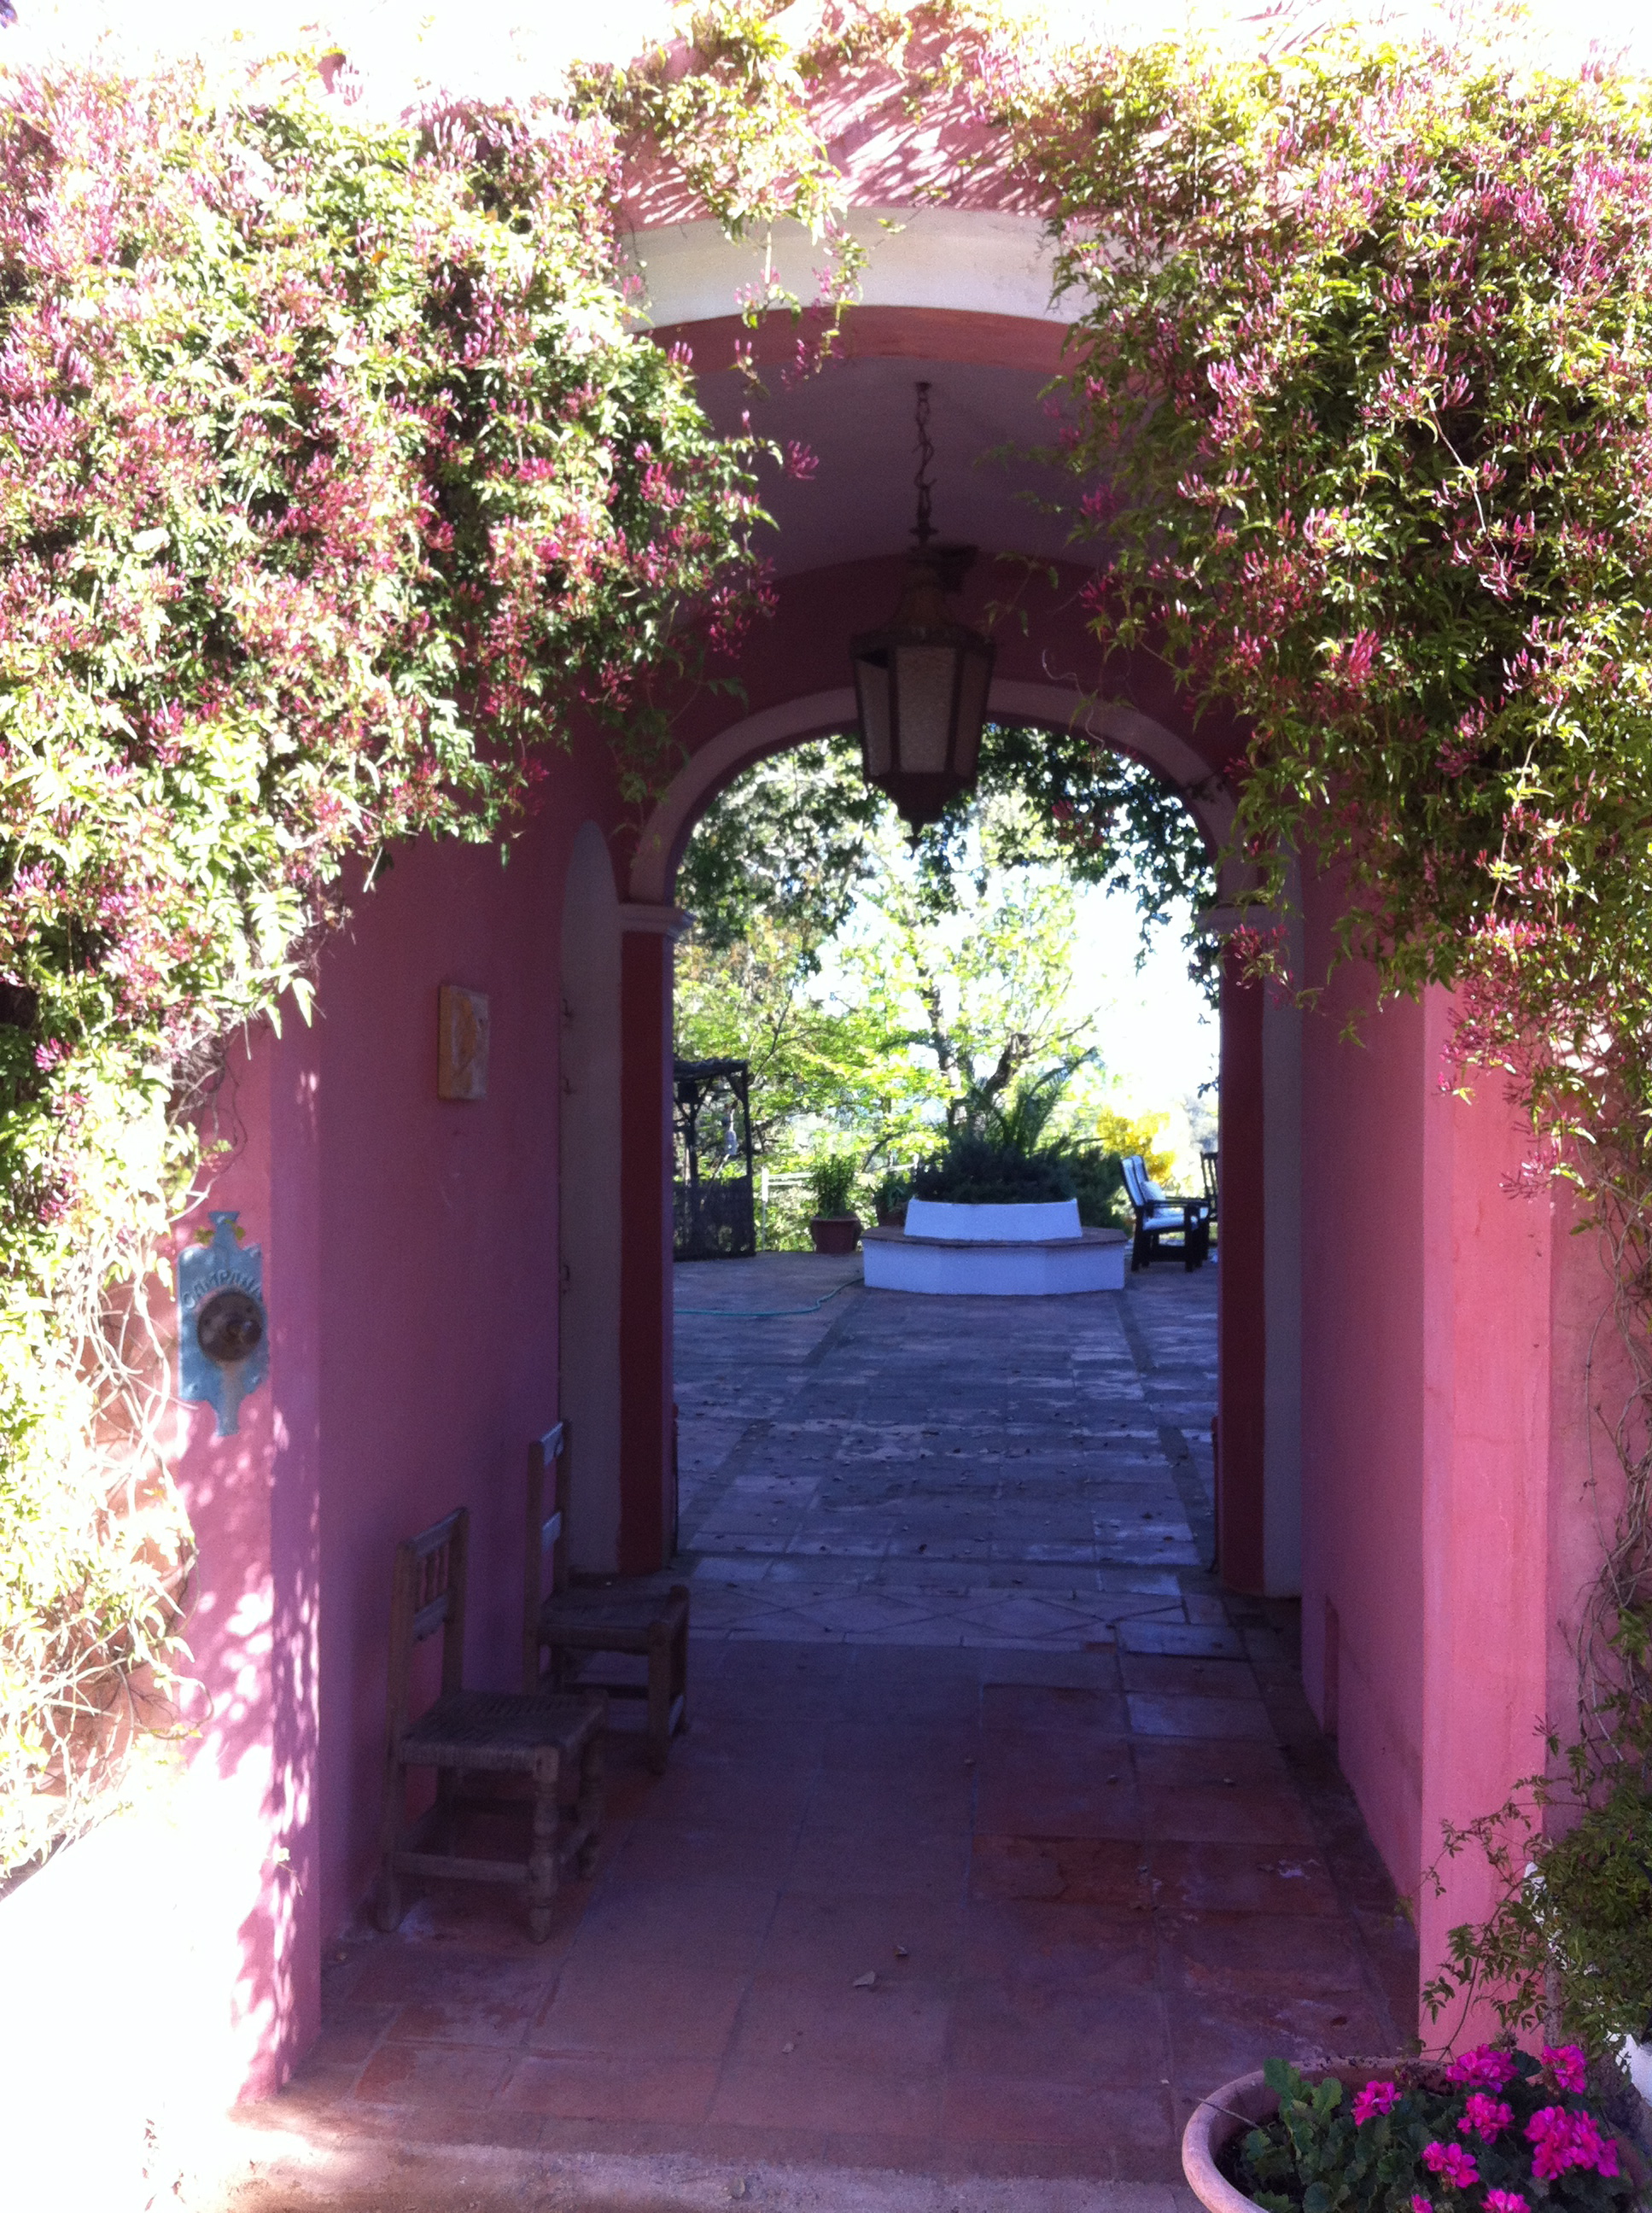 Entrance arch to patio